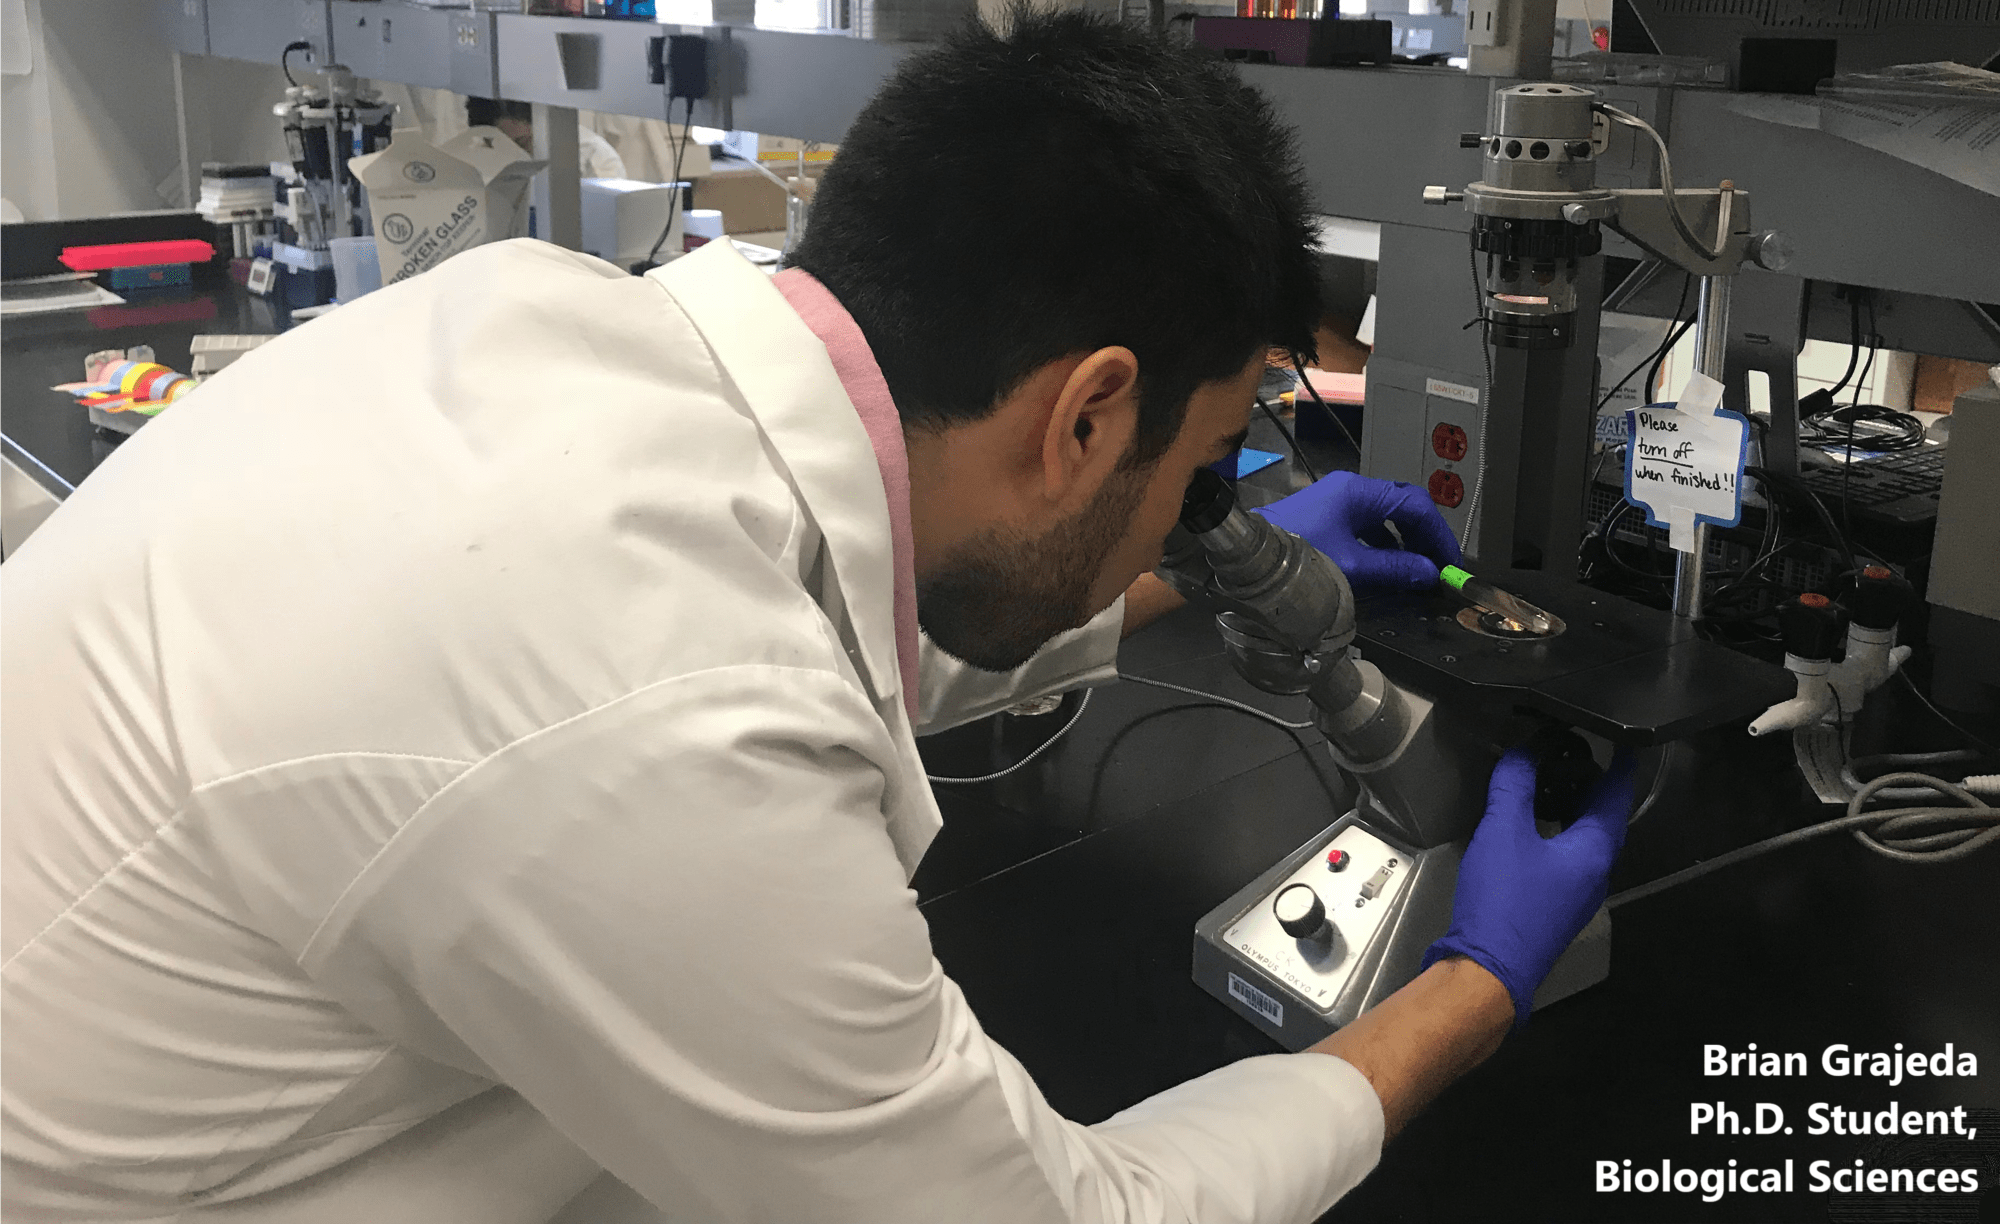 brian grajeda, phd student biology, works on a microscope